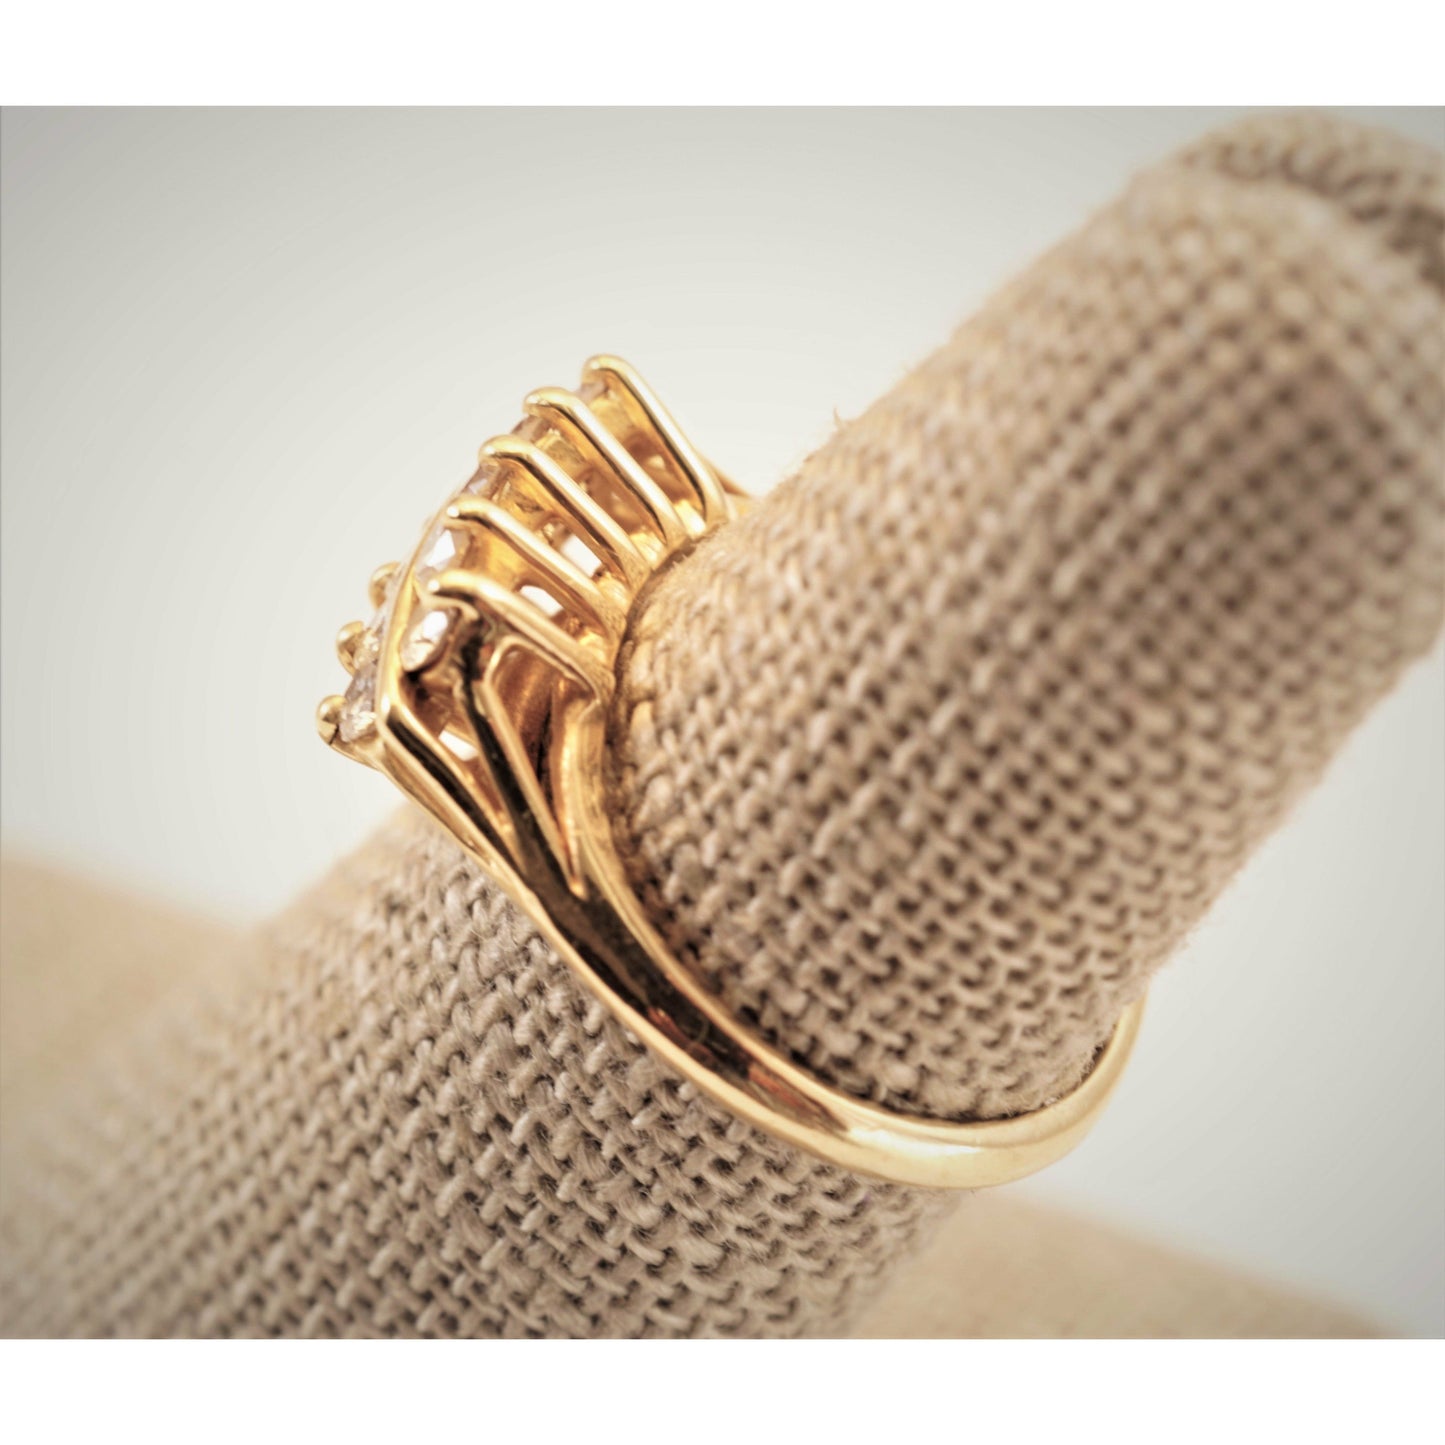 FJL Jewelry Diamond ring Two-Row Diamond Ring in 14K Yellow Gold, 0.50 ctw. Double Diamond Band, Wedding Band, Anniversary